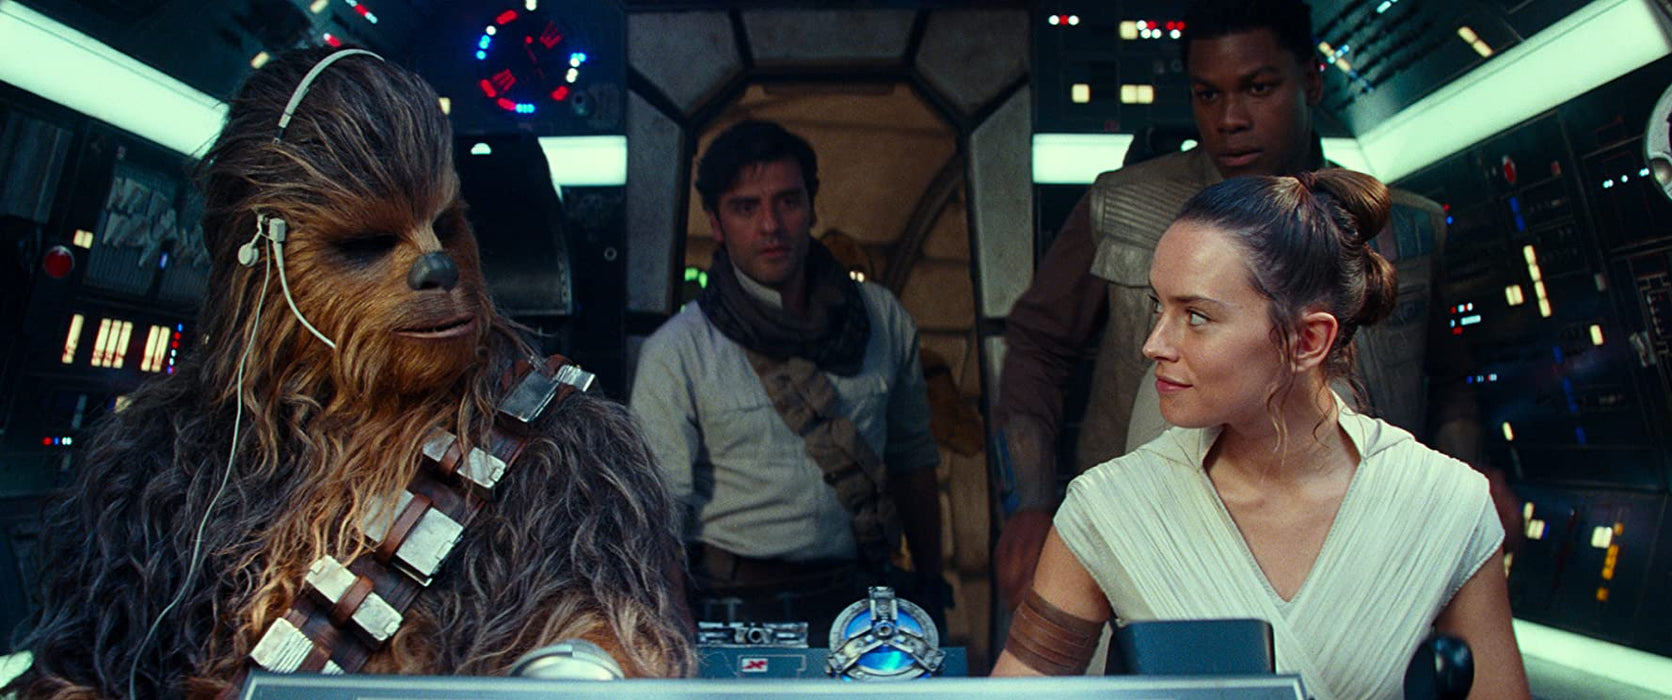 Star Wars: Episode IX - The Rise of Skywalker 4K [Blu-ray + 4K UHD]